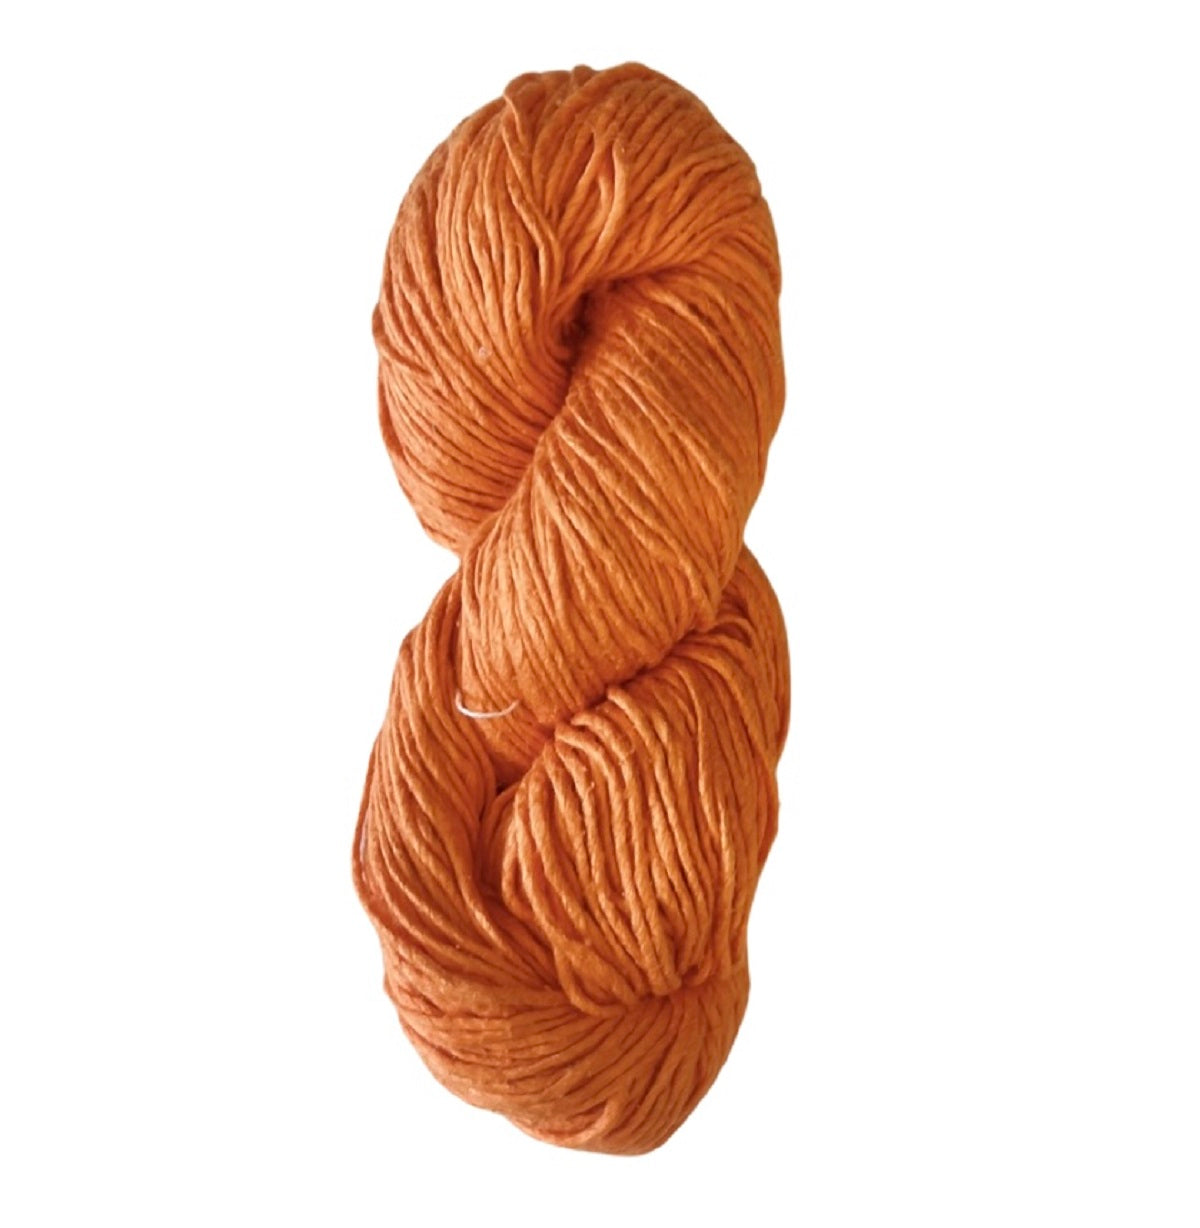 Regal Mulberry Silk Yarn | Worsted Weight | 200 Yards | 100% Mulberry Silk